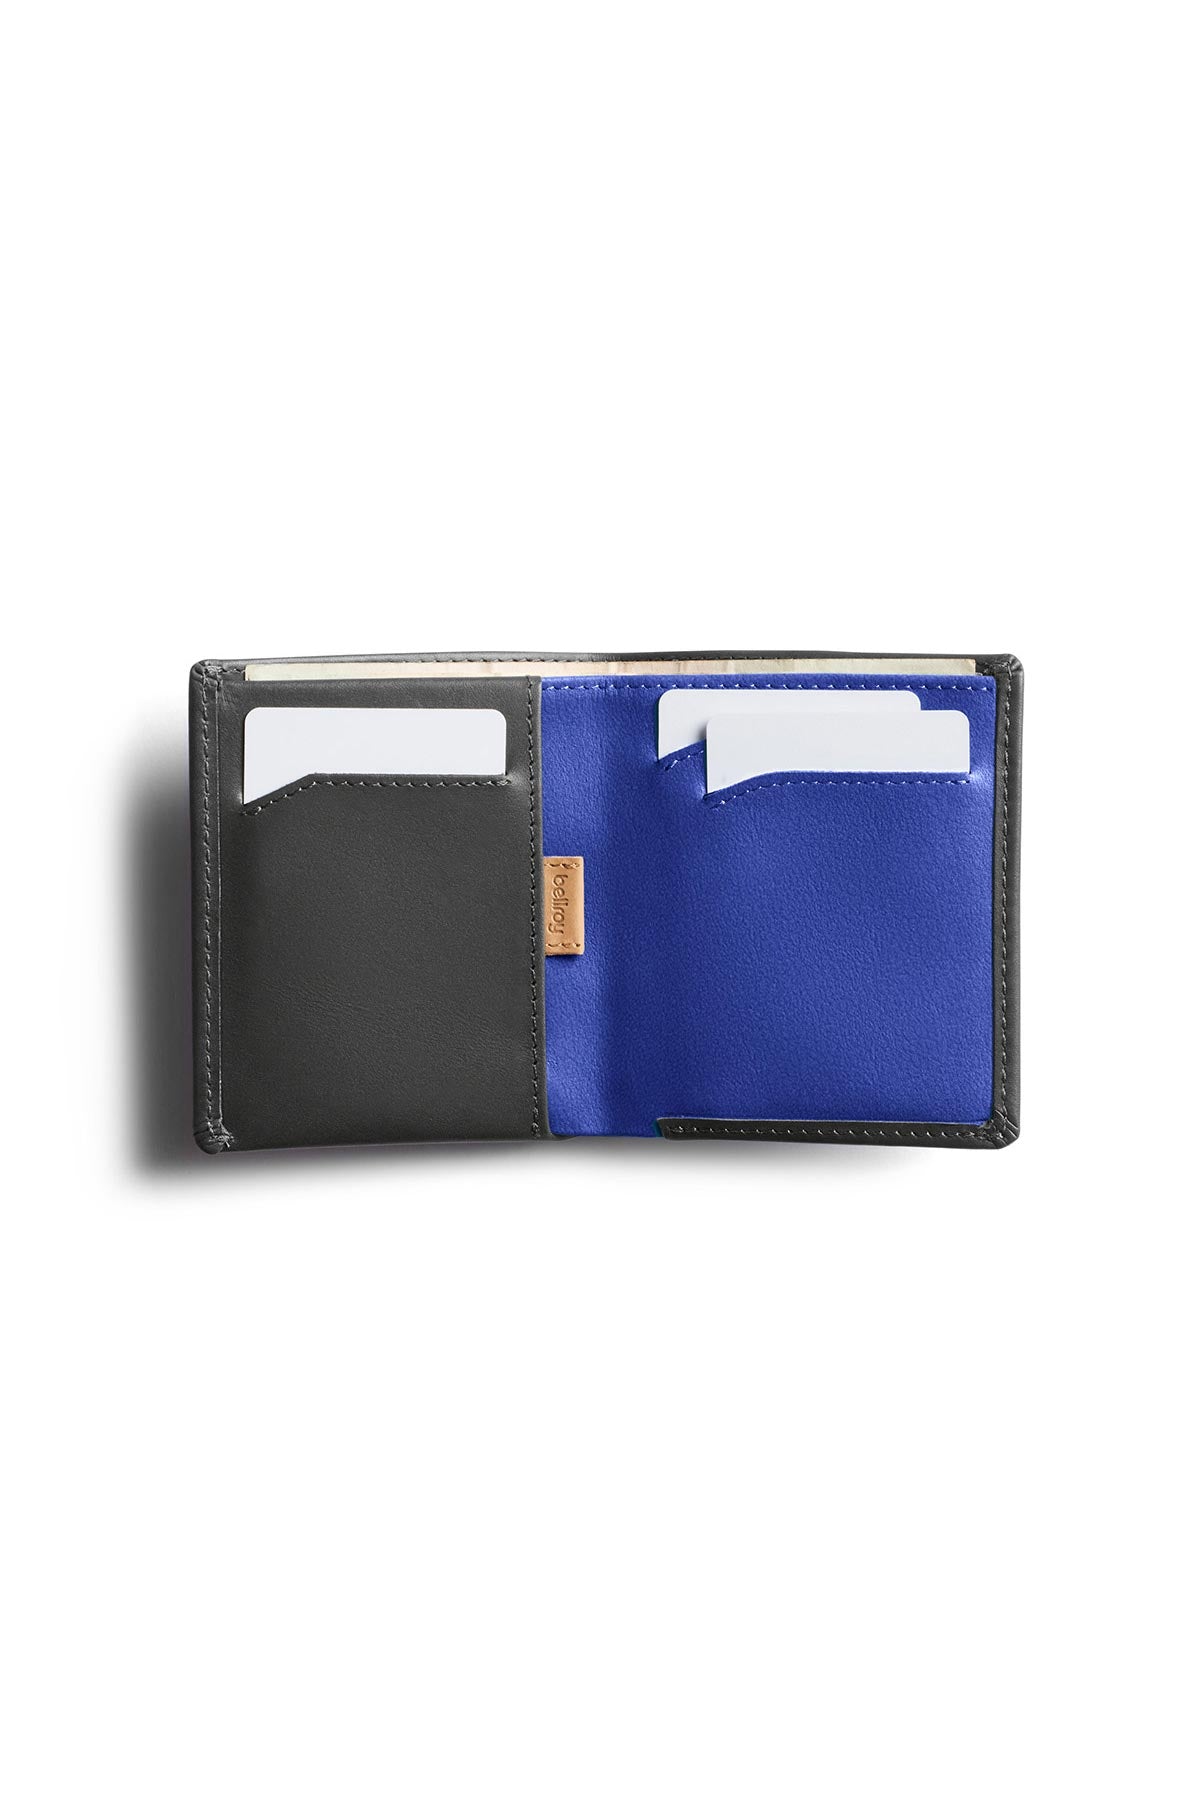 Bellroy - RFID Note Sleeve Wallet - Charcoal Cobalt - Inside